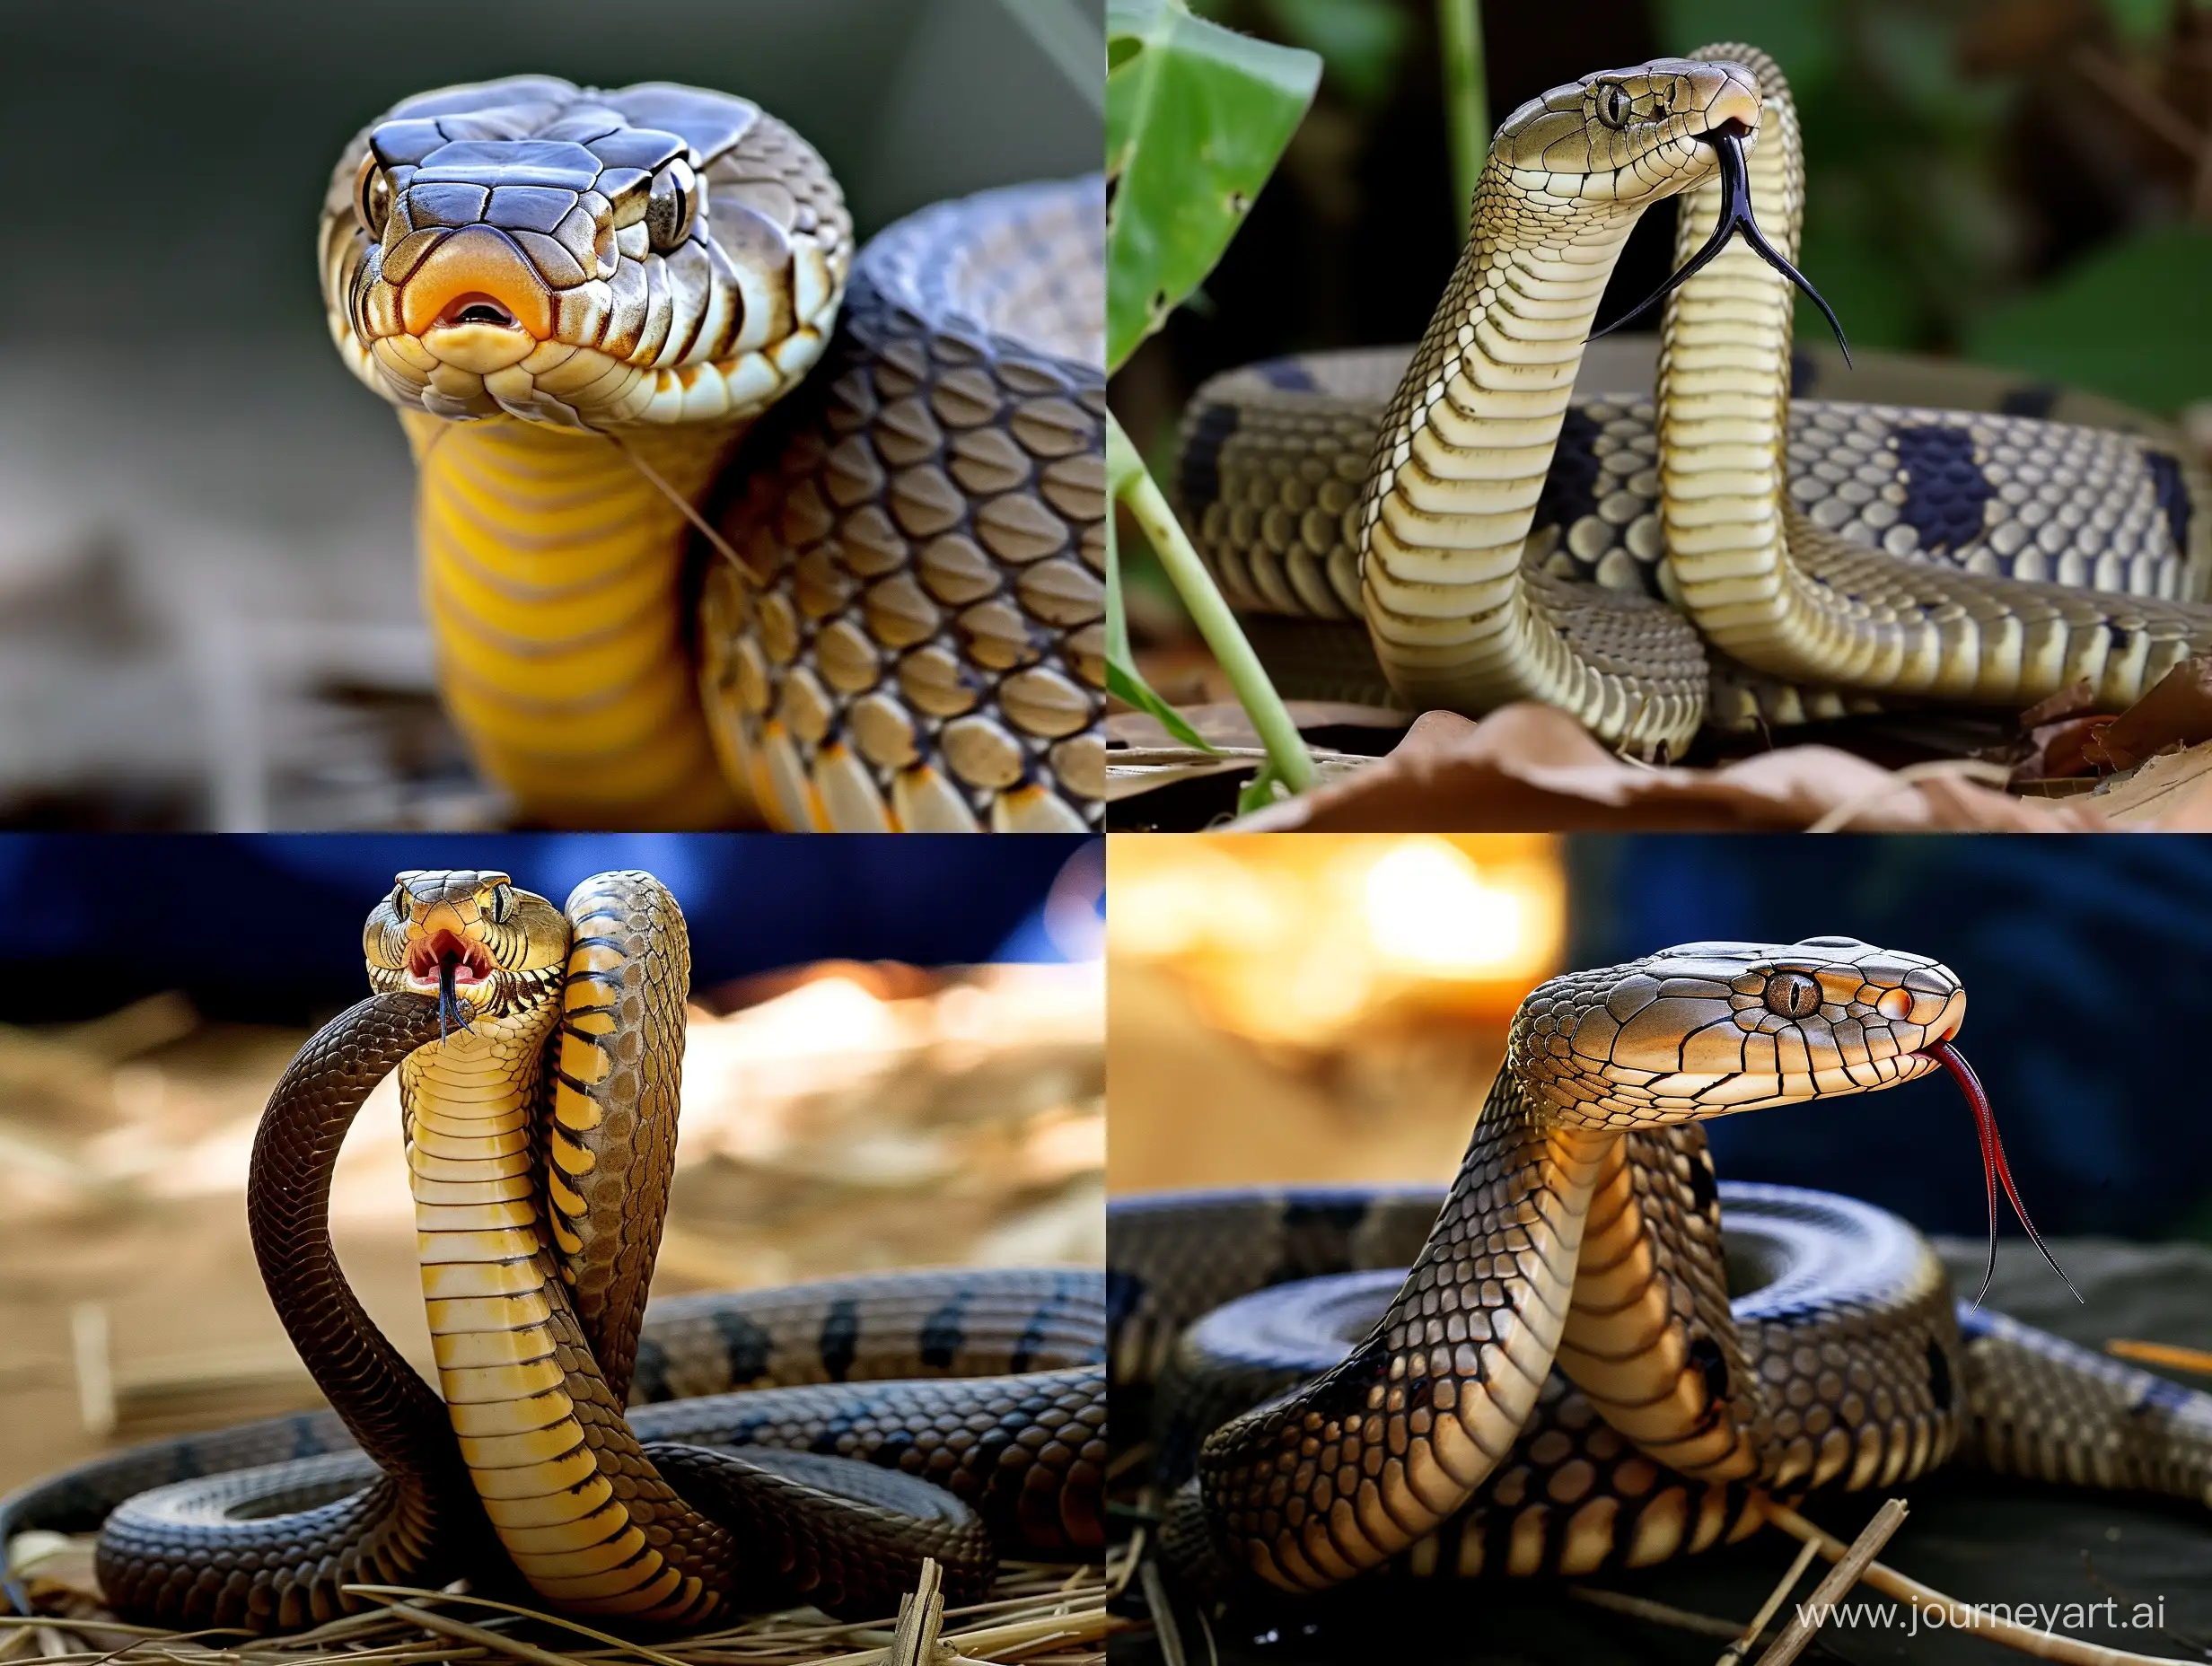 Vibrant-Cobra-Snake-in-a-43-Aspect-Ratio